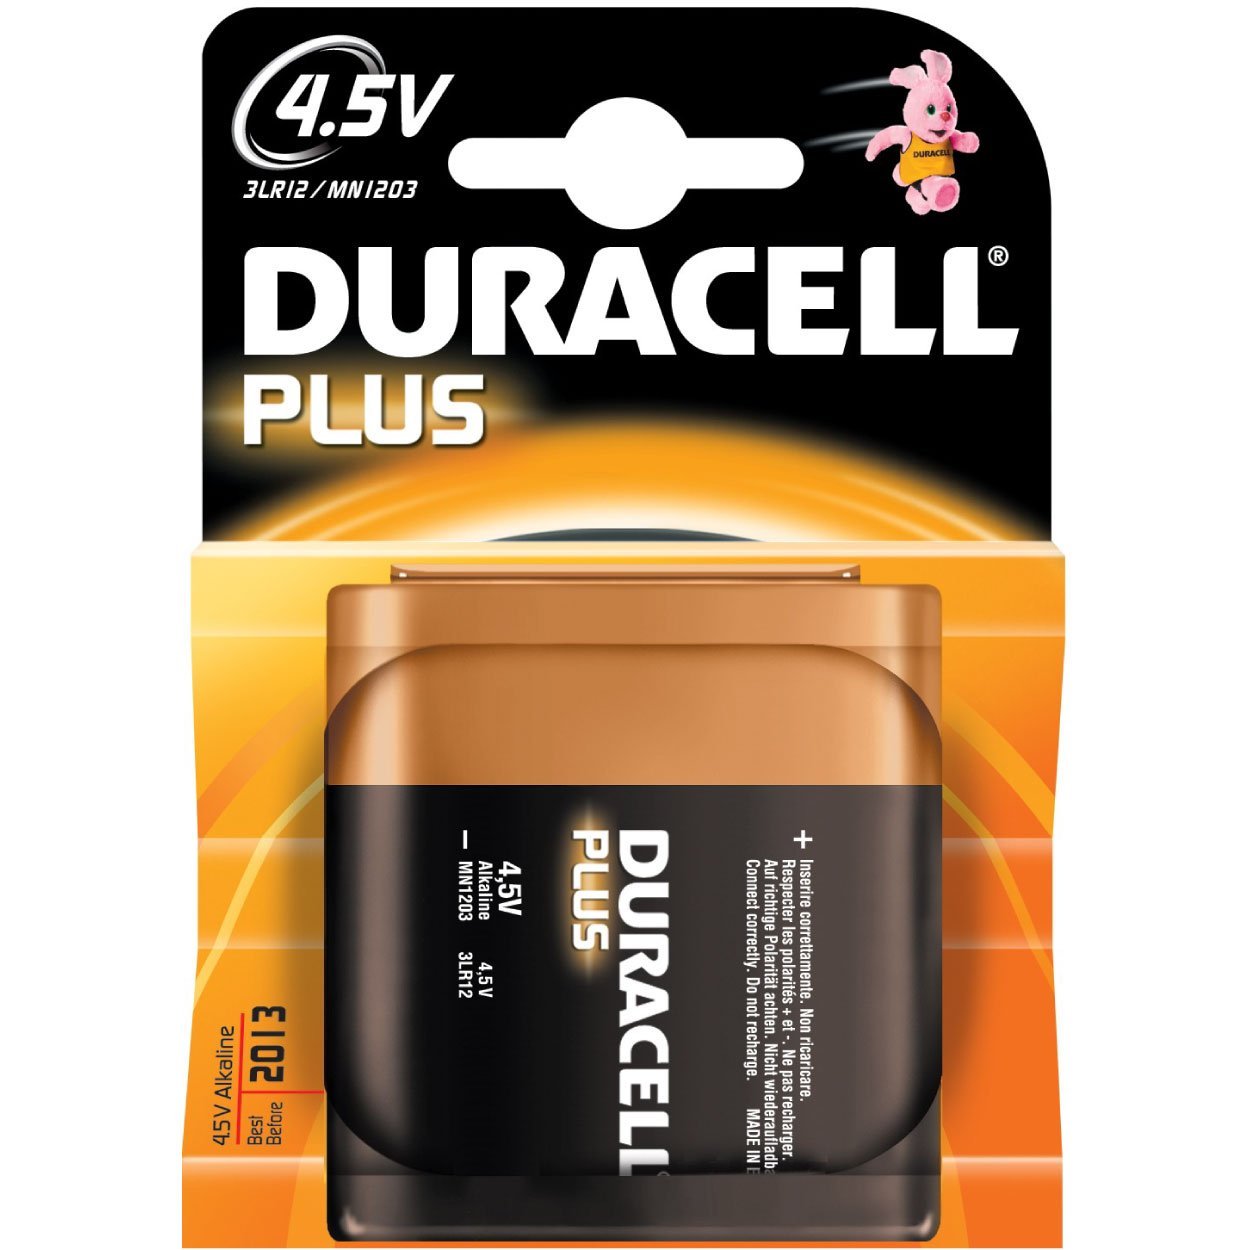 schaamte Groot straffen Duracell 3LR12 Plus 4,5V platte batterij bl/1 - Excellentwebshop